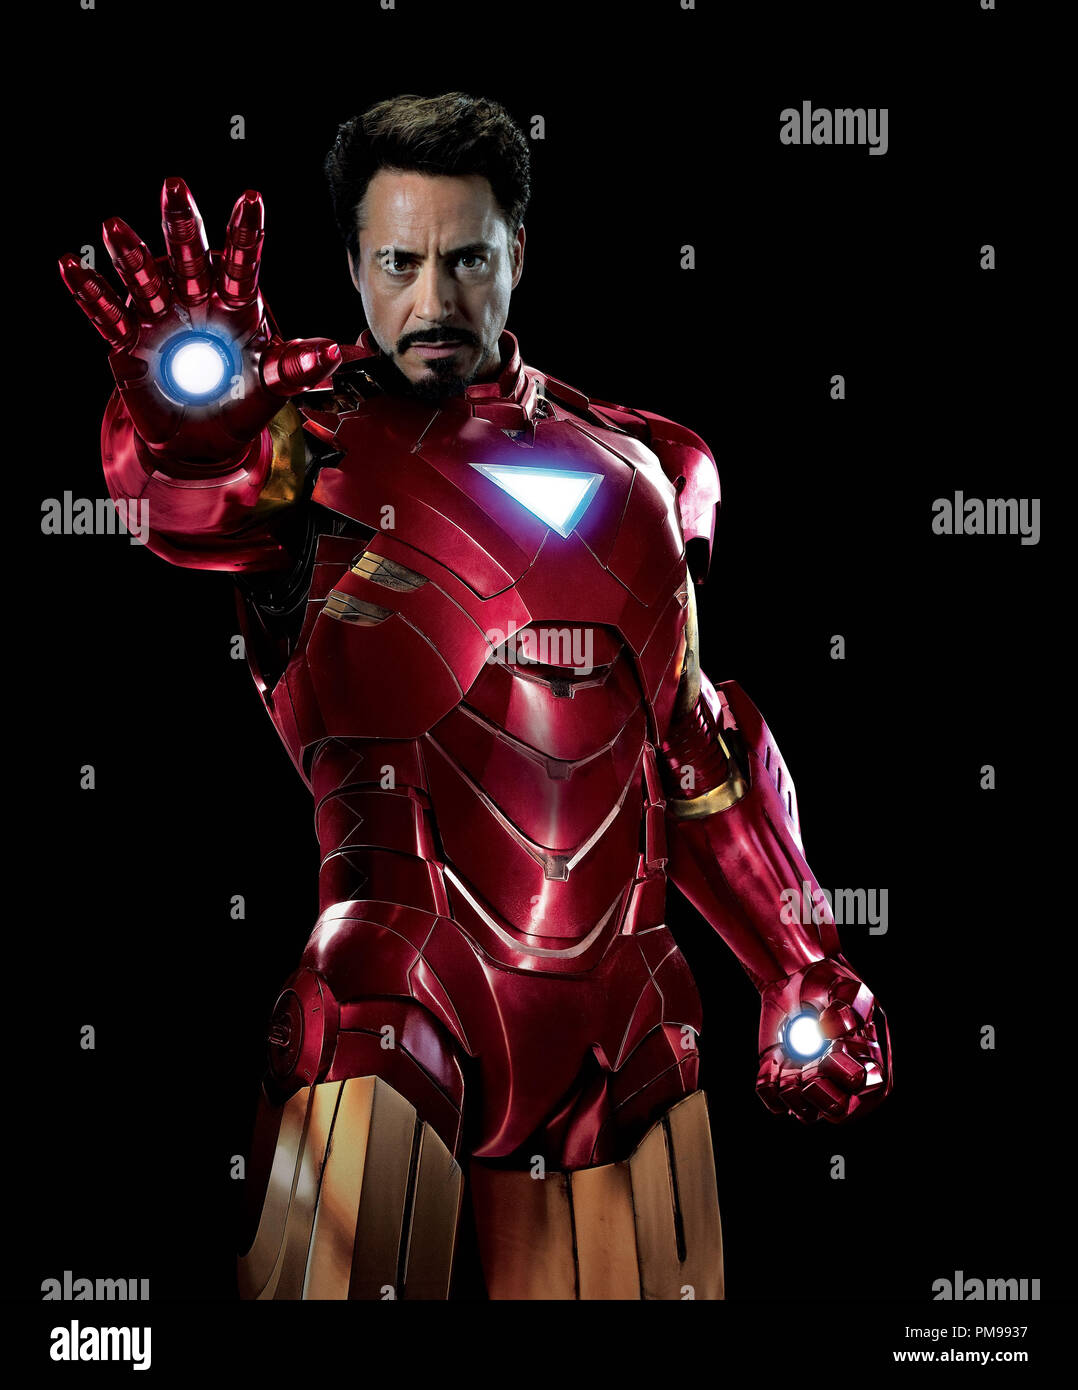 'Iron Man 3' Tony Stark/Iron Man (Robert Downey Jr.) Stock Photo